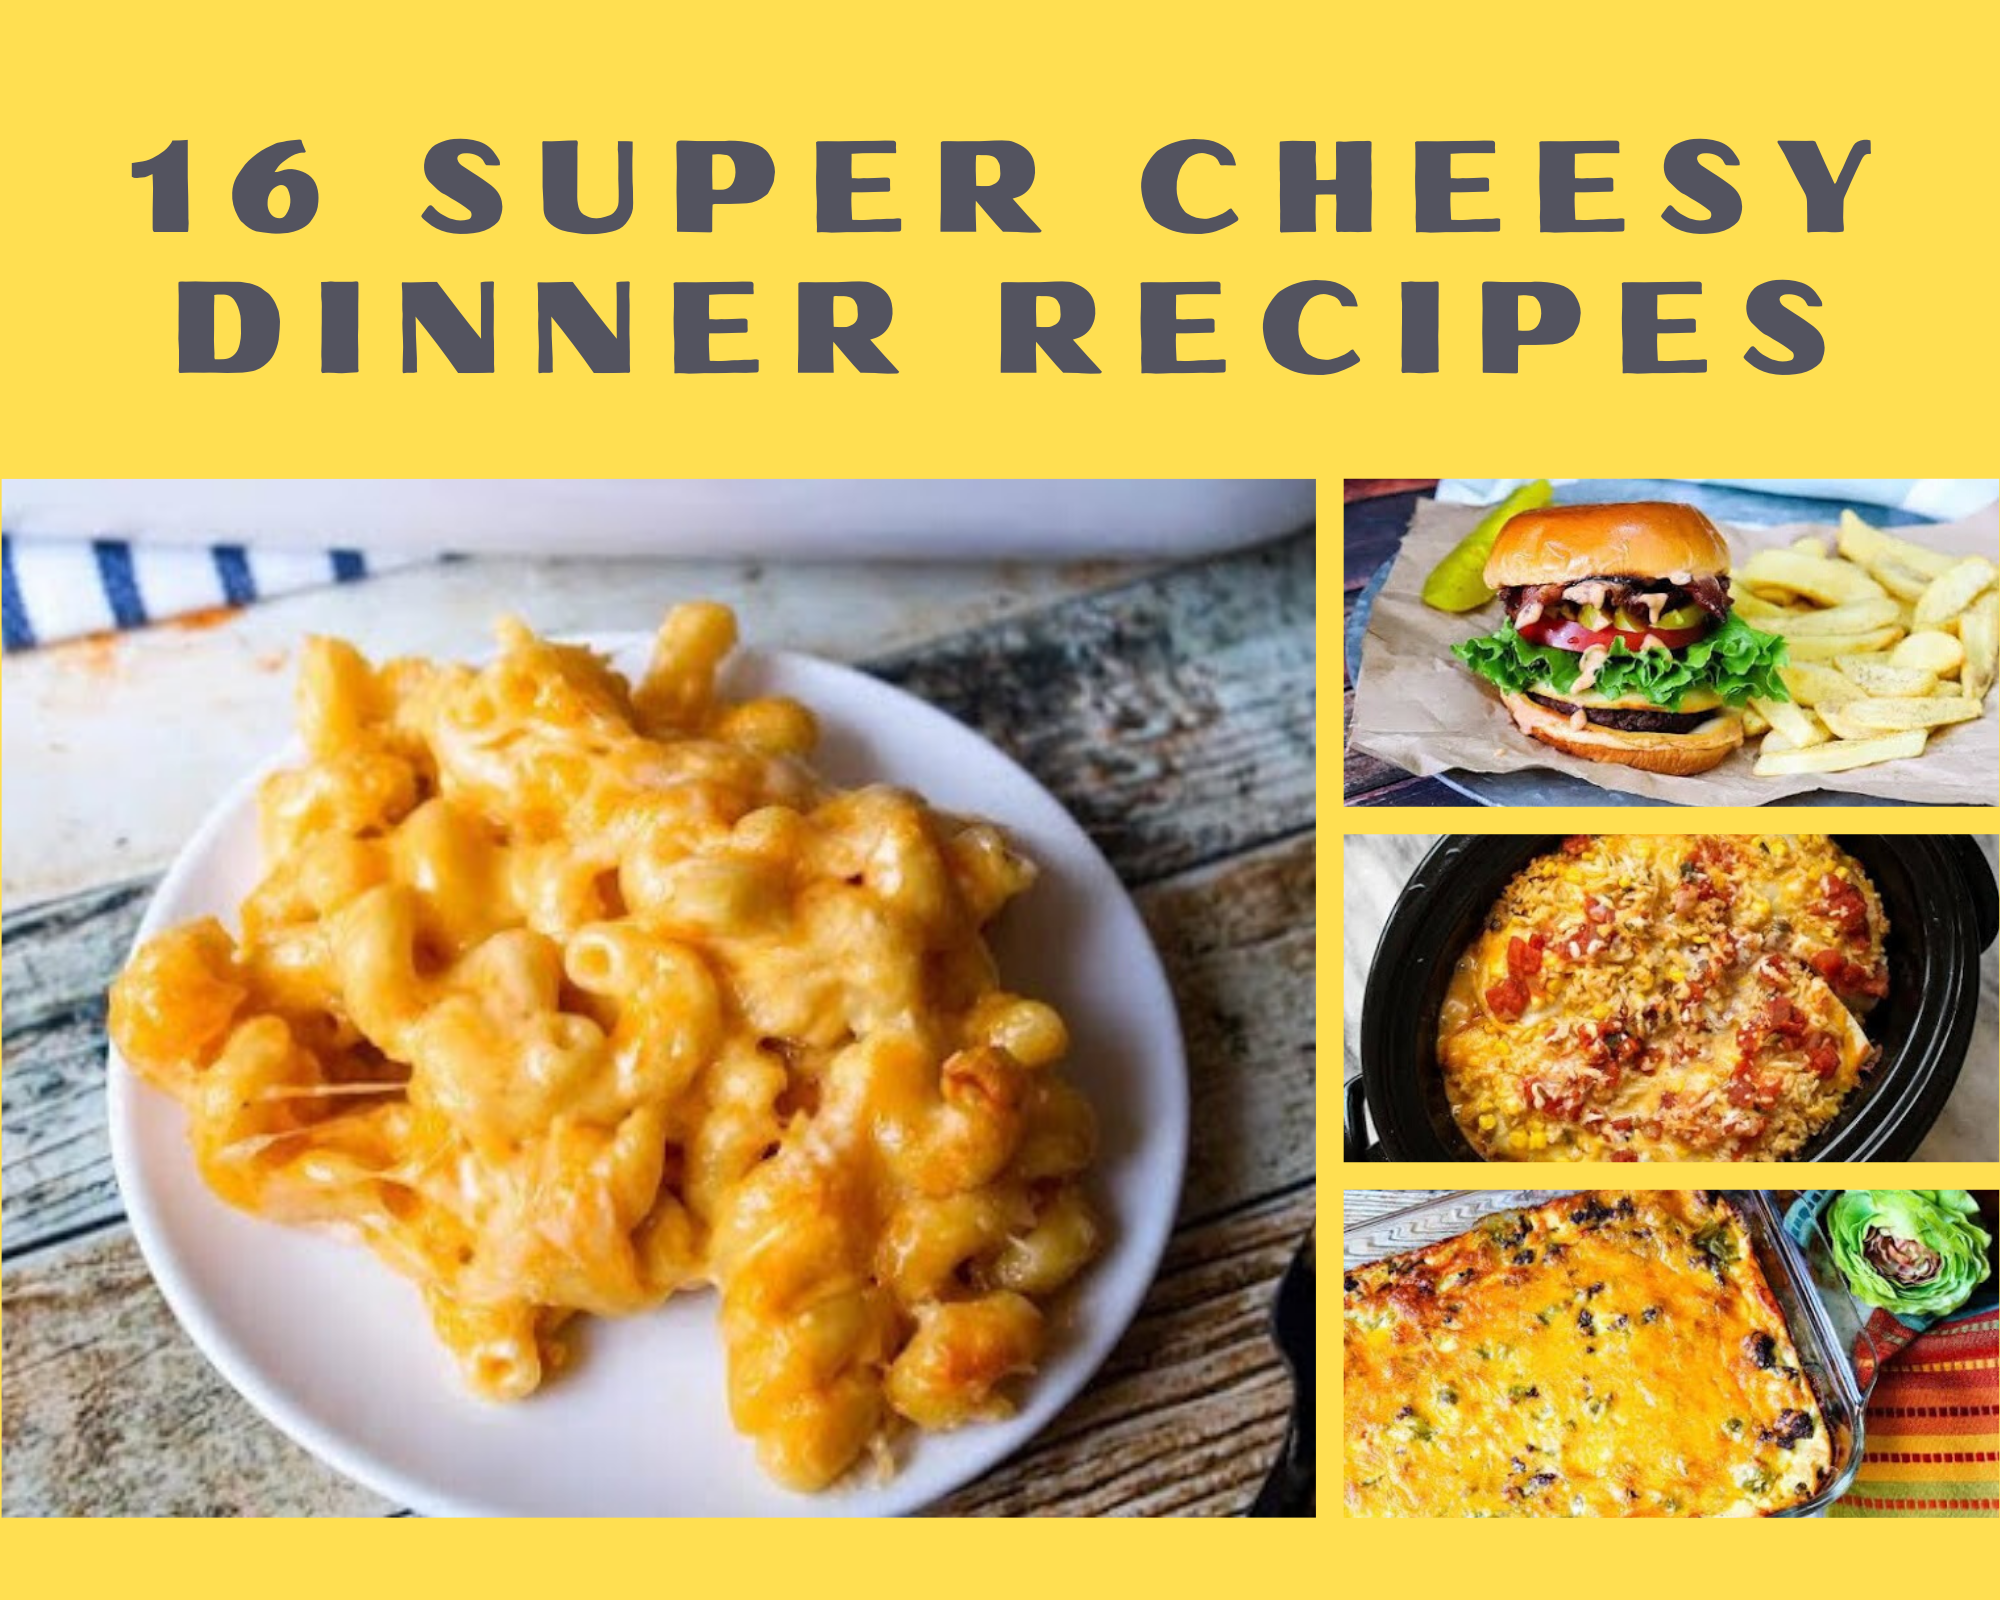 Macaroni and cheese, gouda cheeseburgers, cheesy casseroles and cheesy crock pot recipes